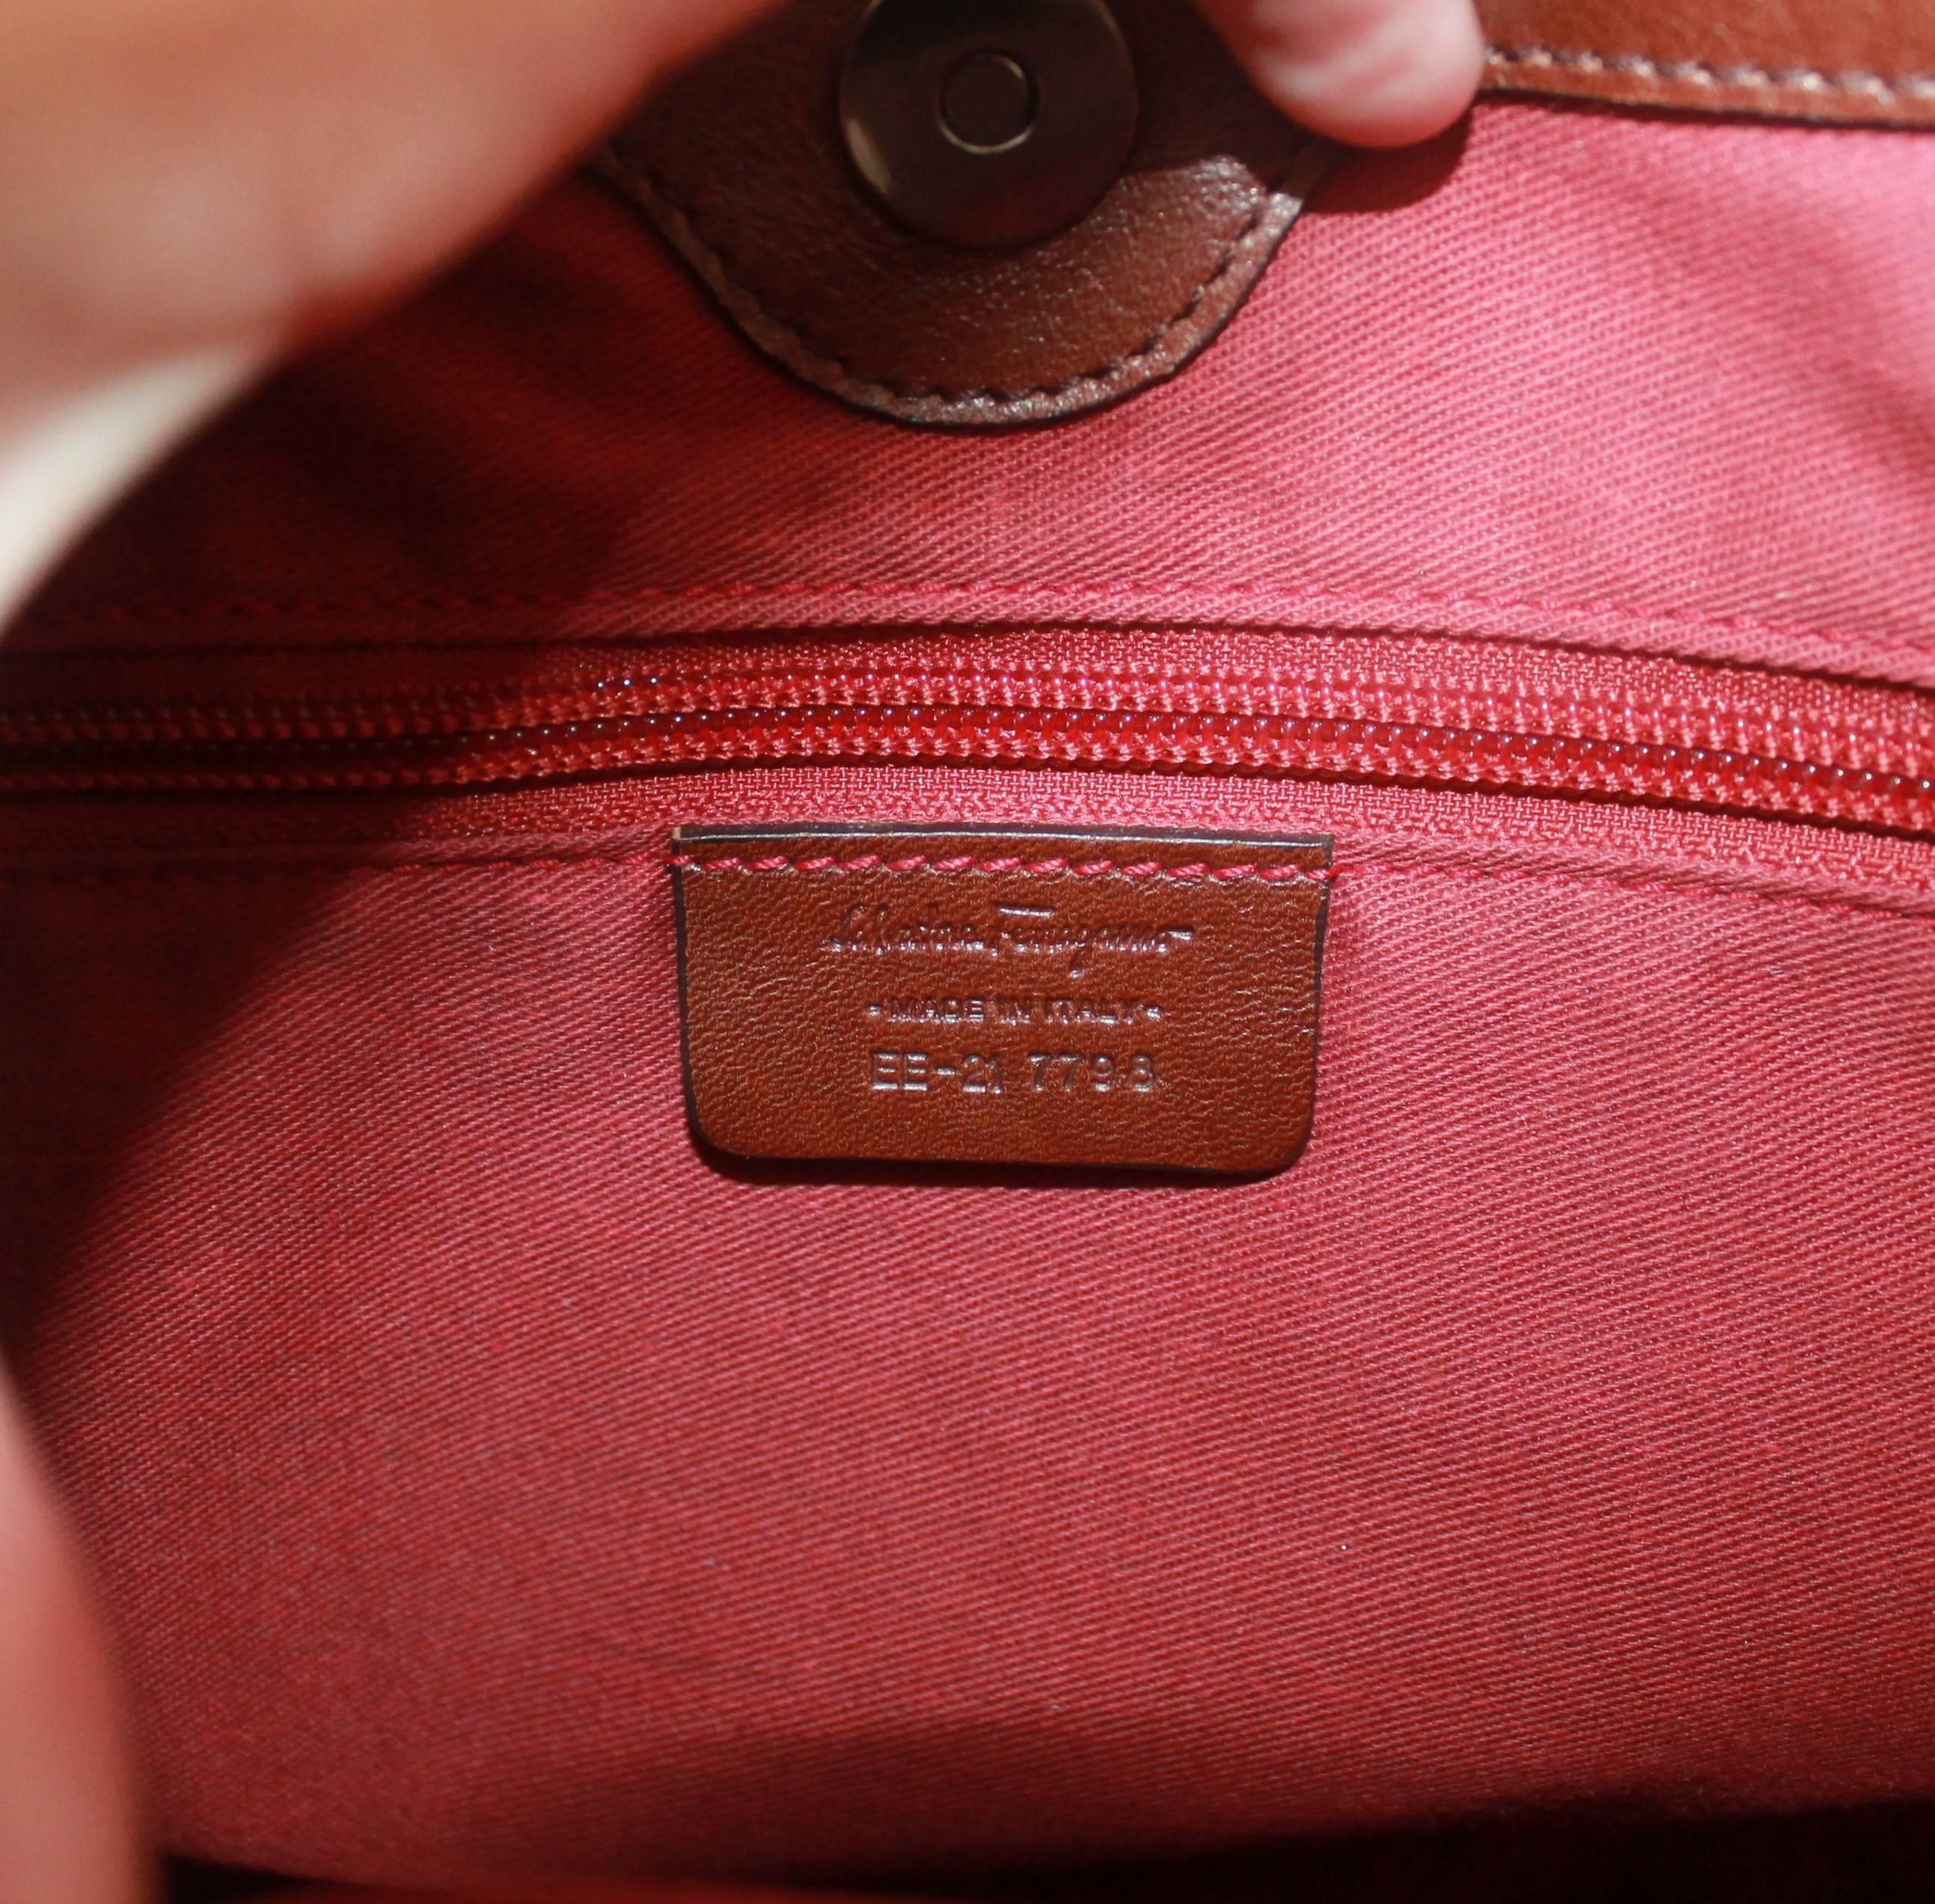 Salvatore Ferragamo Two-Toned Brown Leather Should Bag - SHW 3